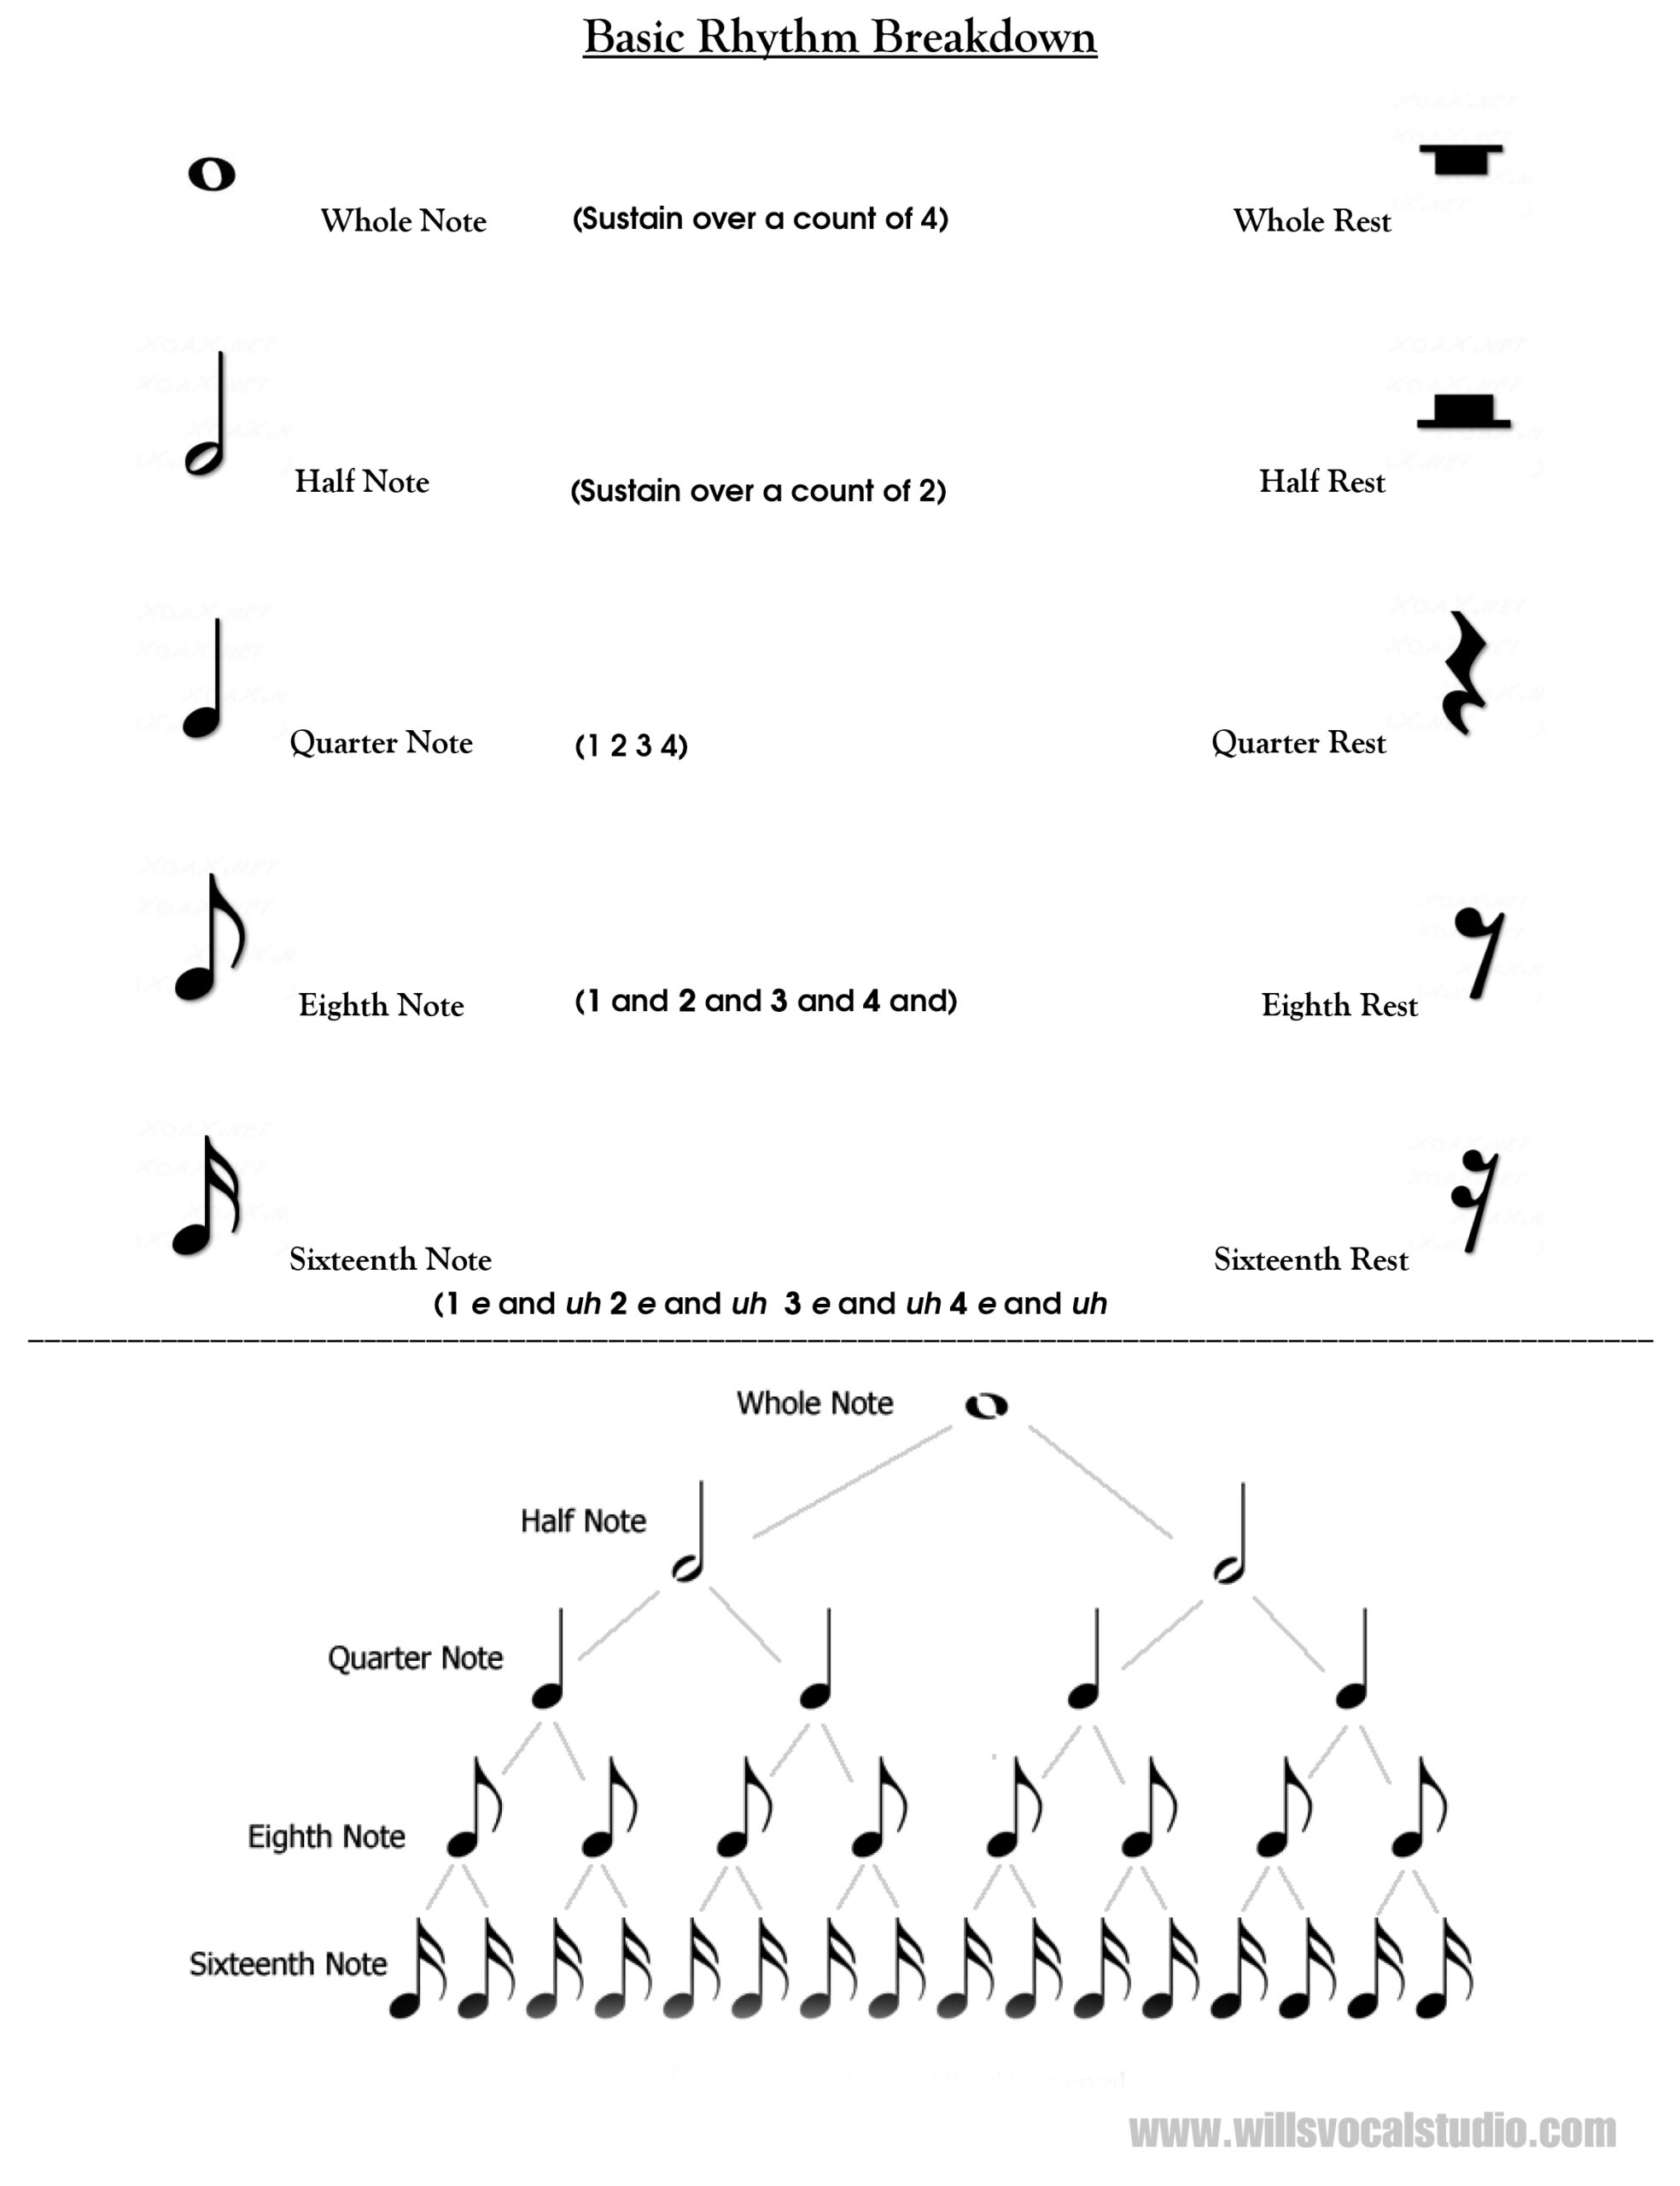 Basic Rhythmic Chart ⋆ Will's Vocal Lesson